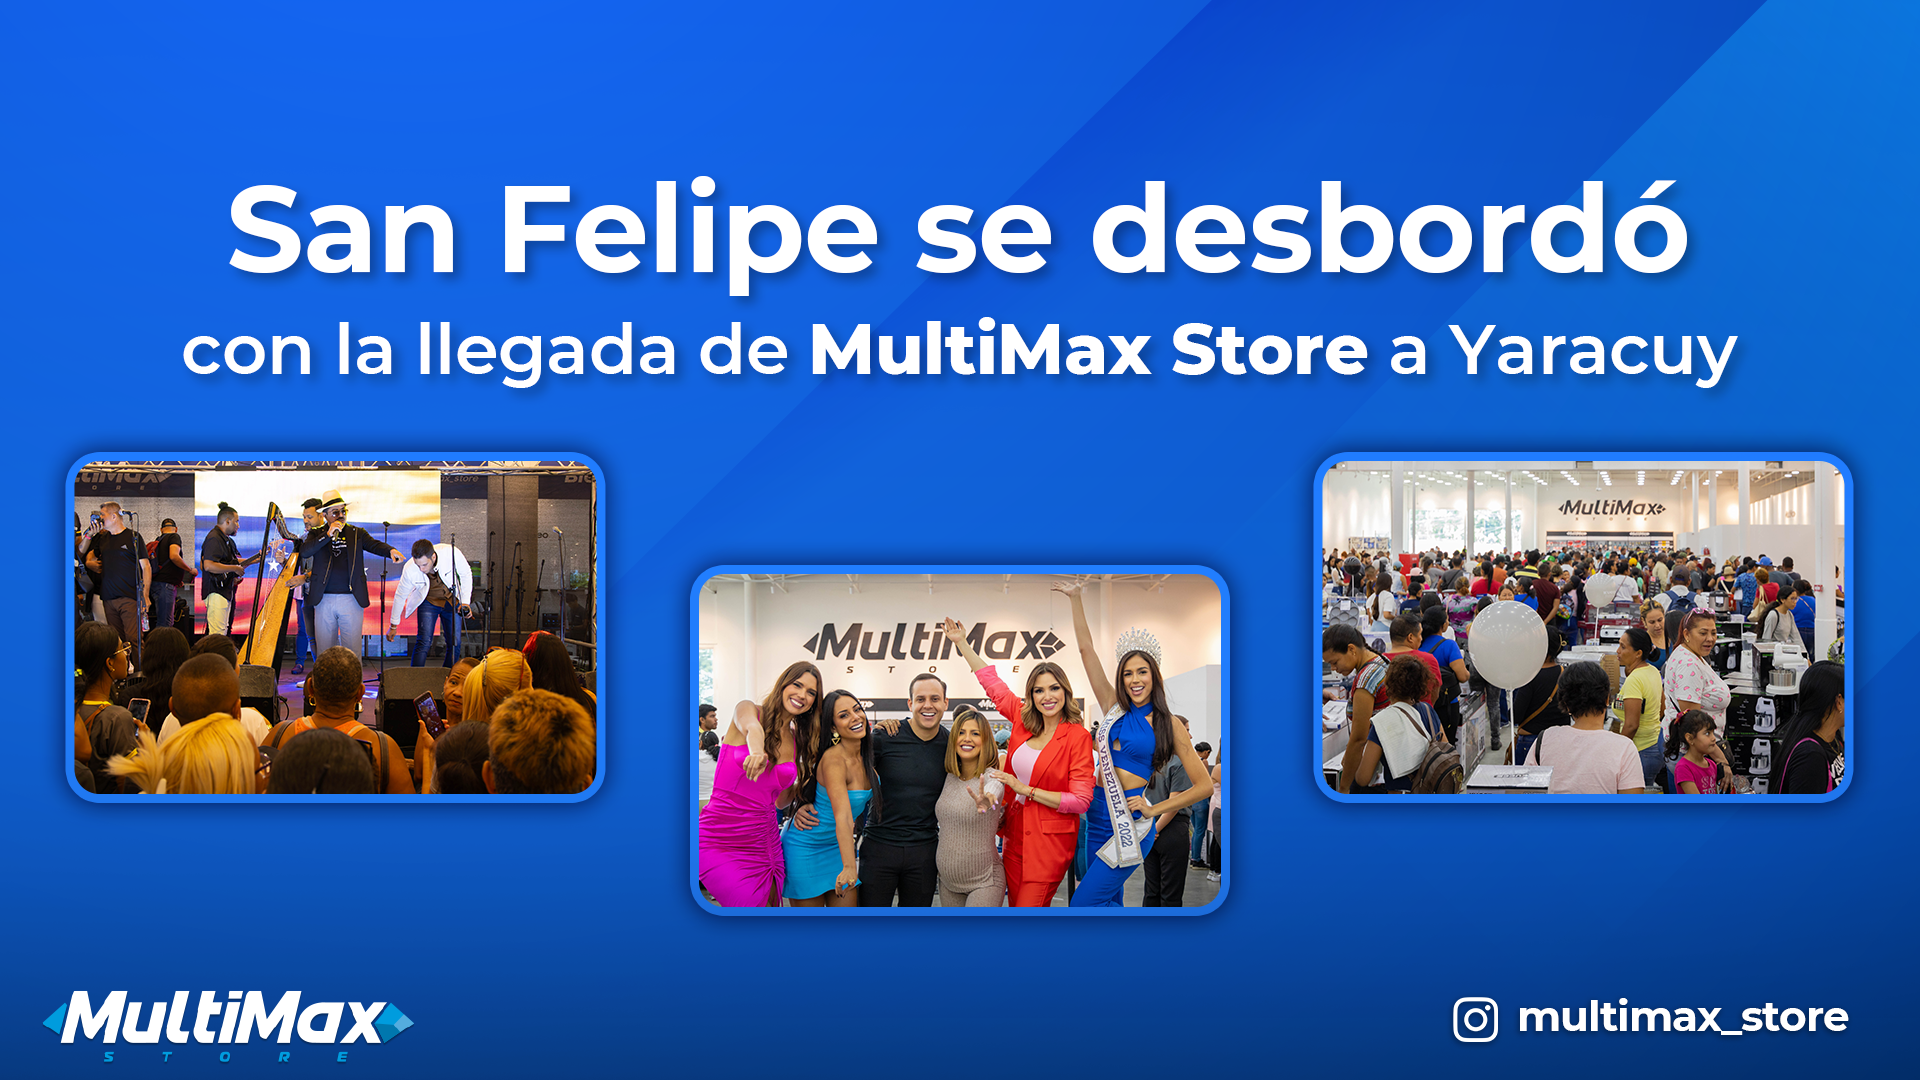 MultiMax Store San Felipe - Presidente de Multimax Store Nasar Ramadan Dagga